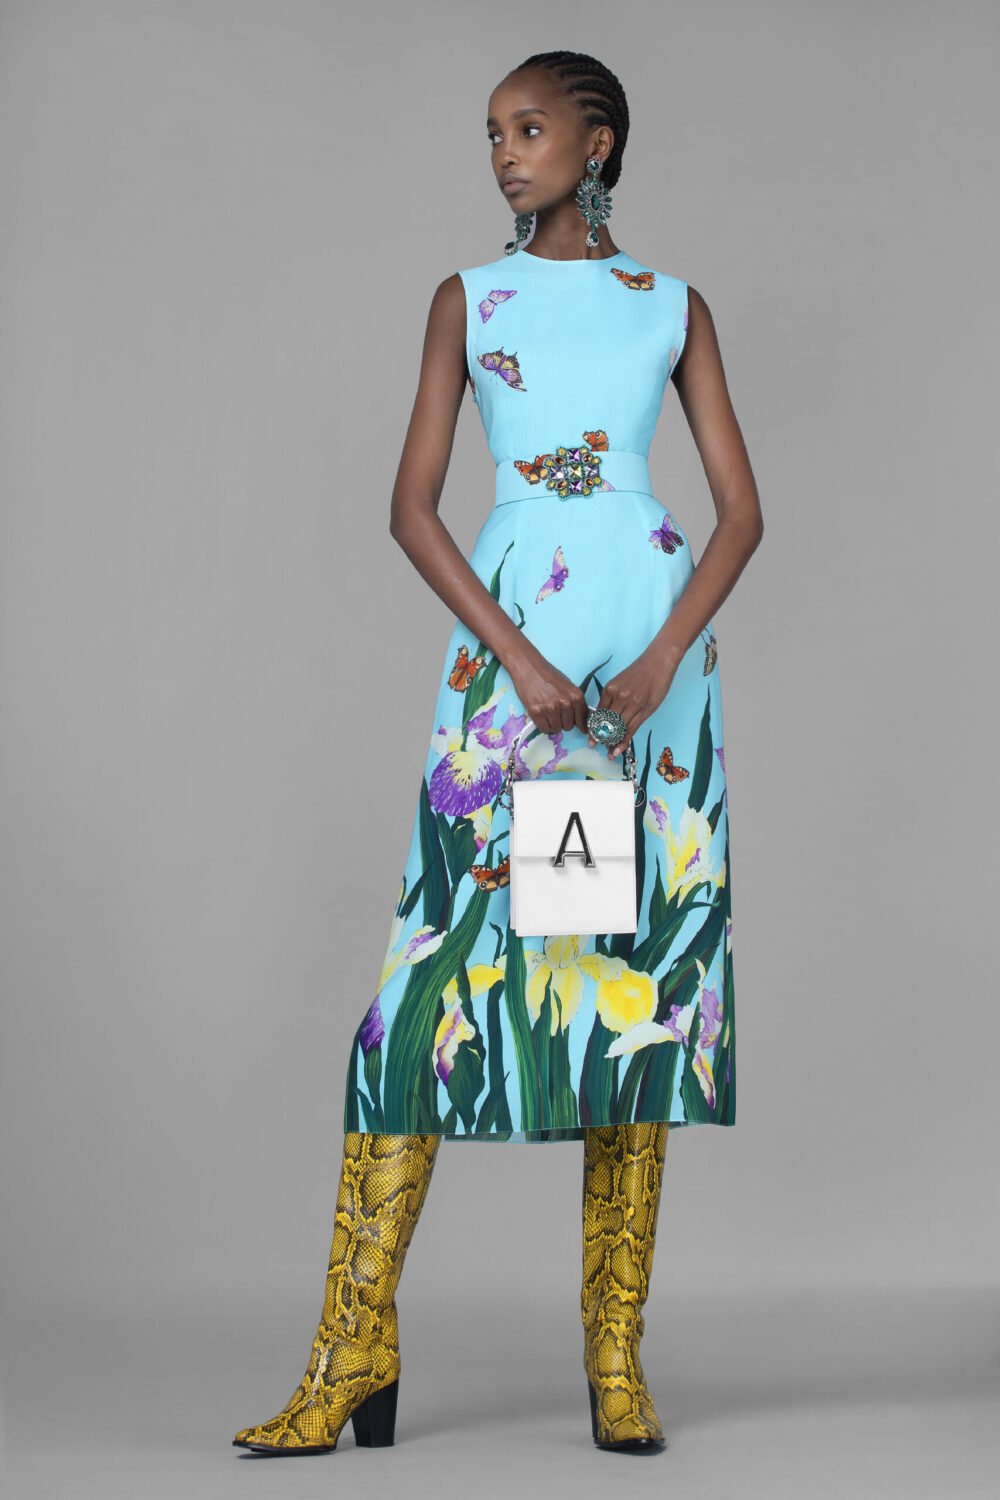 Andrew Gn Spring 2021 Collection at Paris Fashion Week I DreaminLace.com #ParisFashionWeek #FashionWeek #WomensFashion